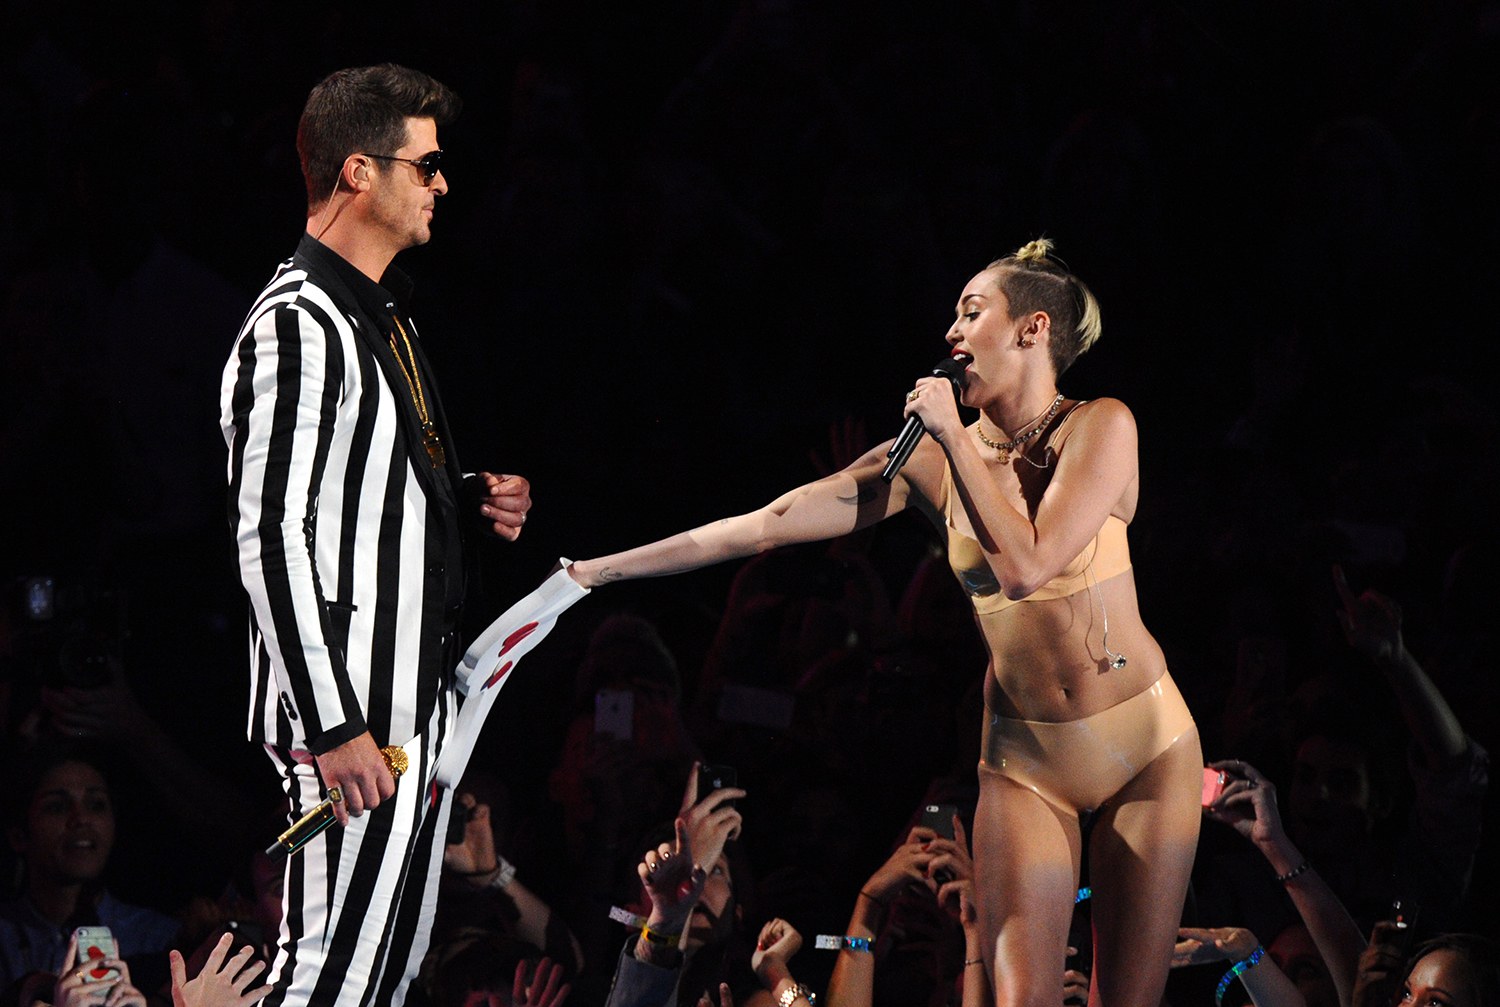 Miley Cyrus gets embarrassingly raunchy at the VMAs